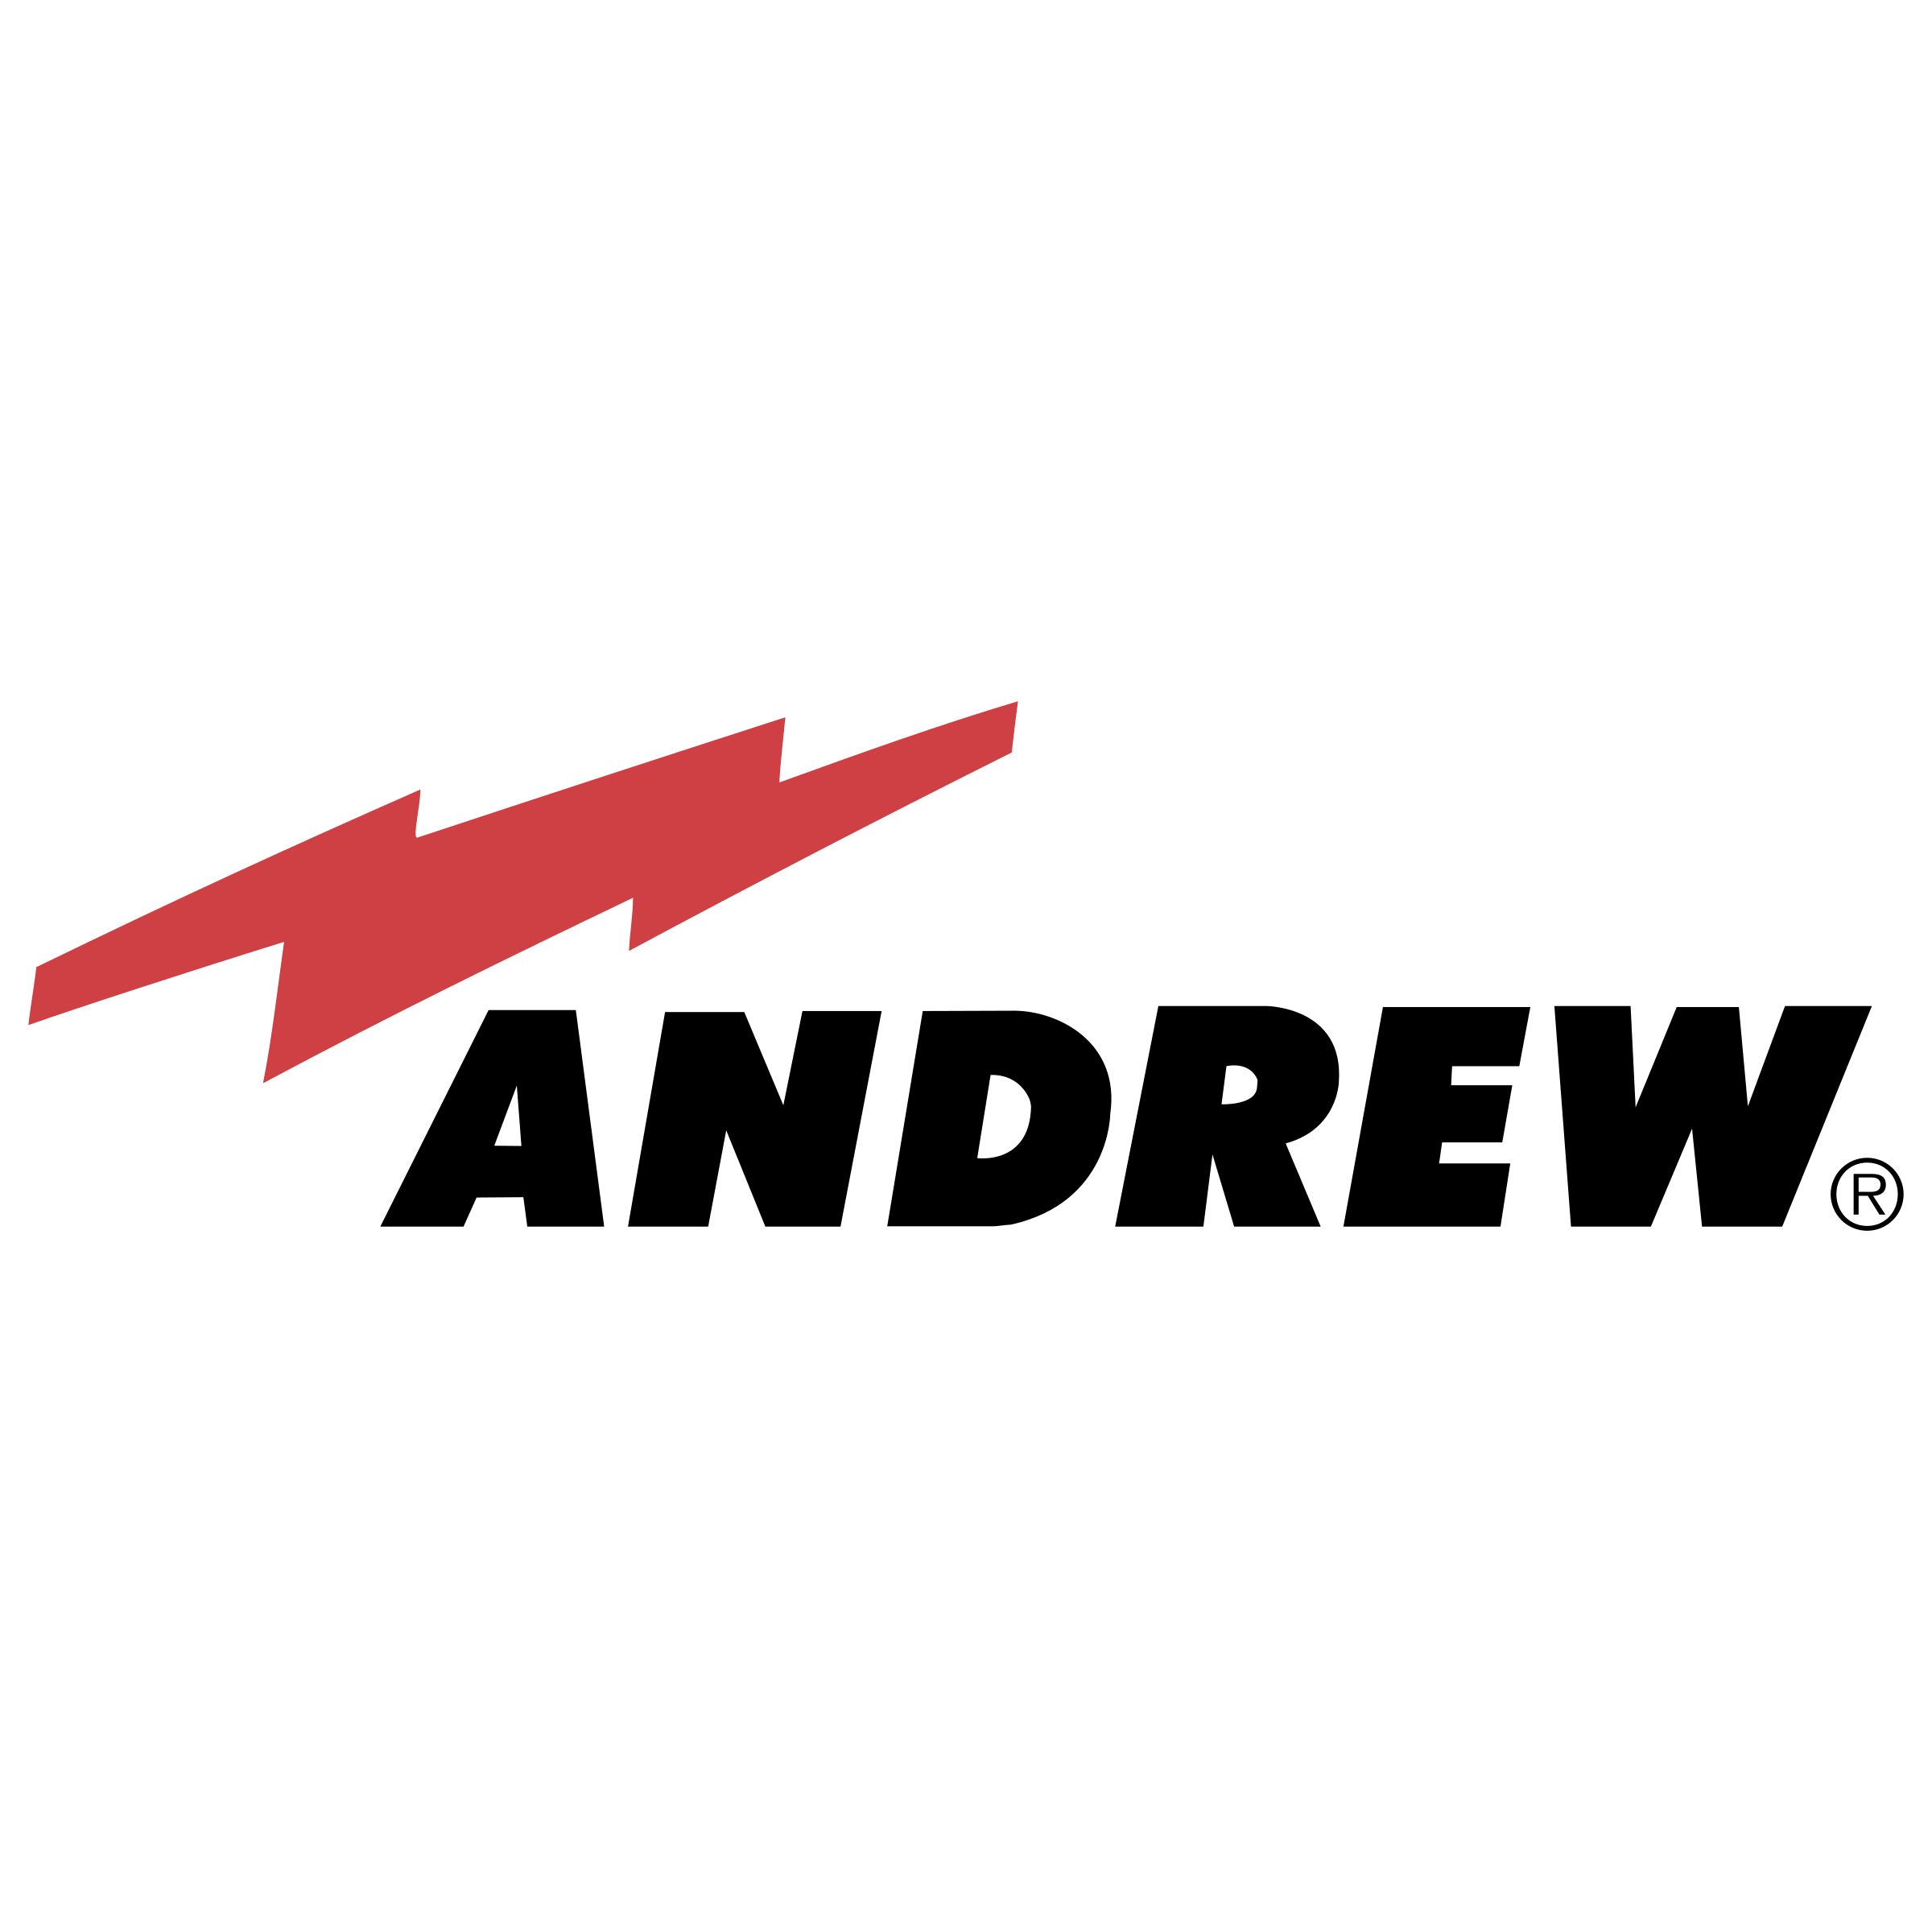 Andrew Logo - Andrew Logo PNG Transparent & SVG Vector - Freebie Supply